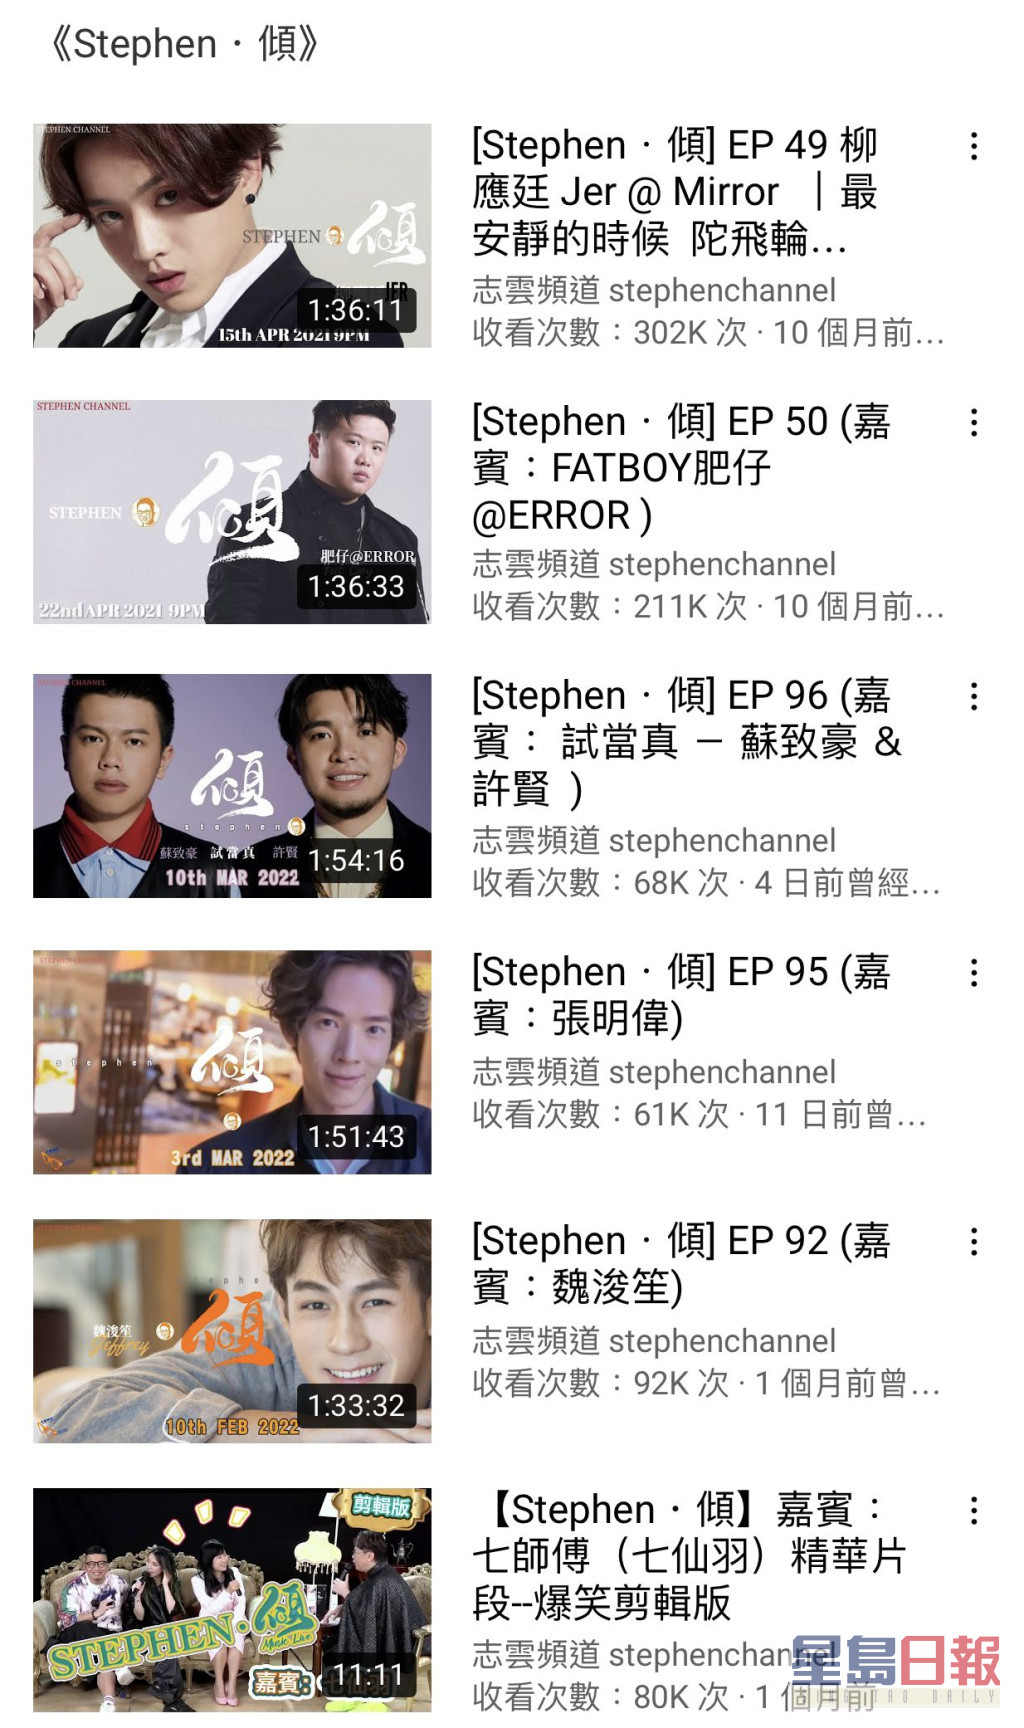 Stephen的频道访问过不少嘉宾，但TVB艺人就唔多见。